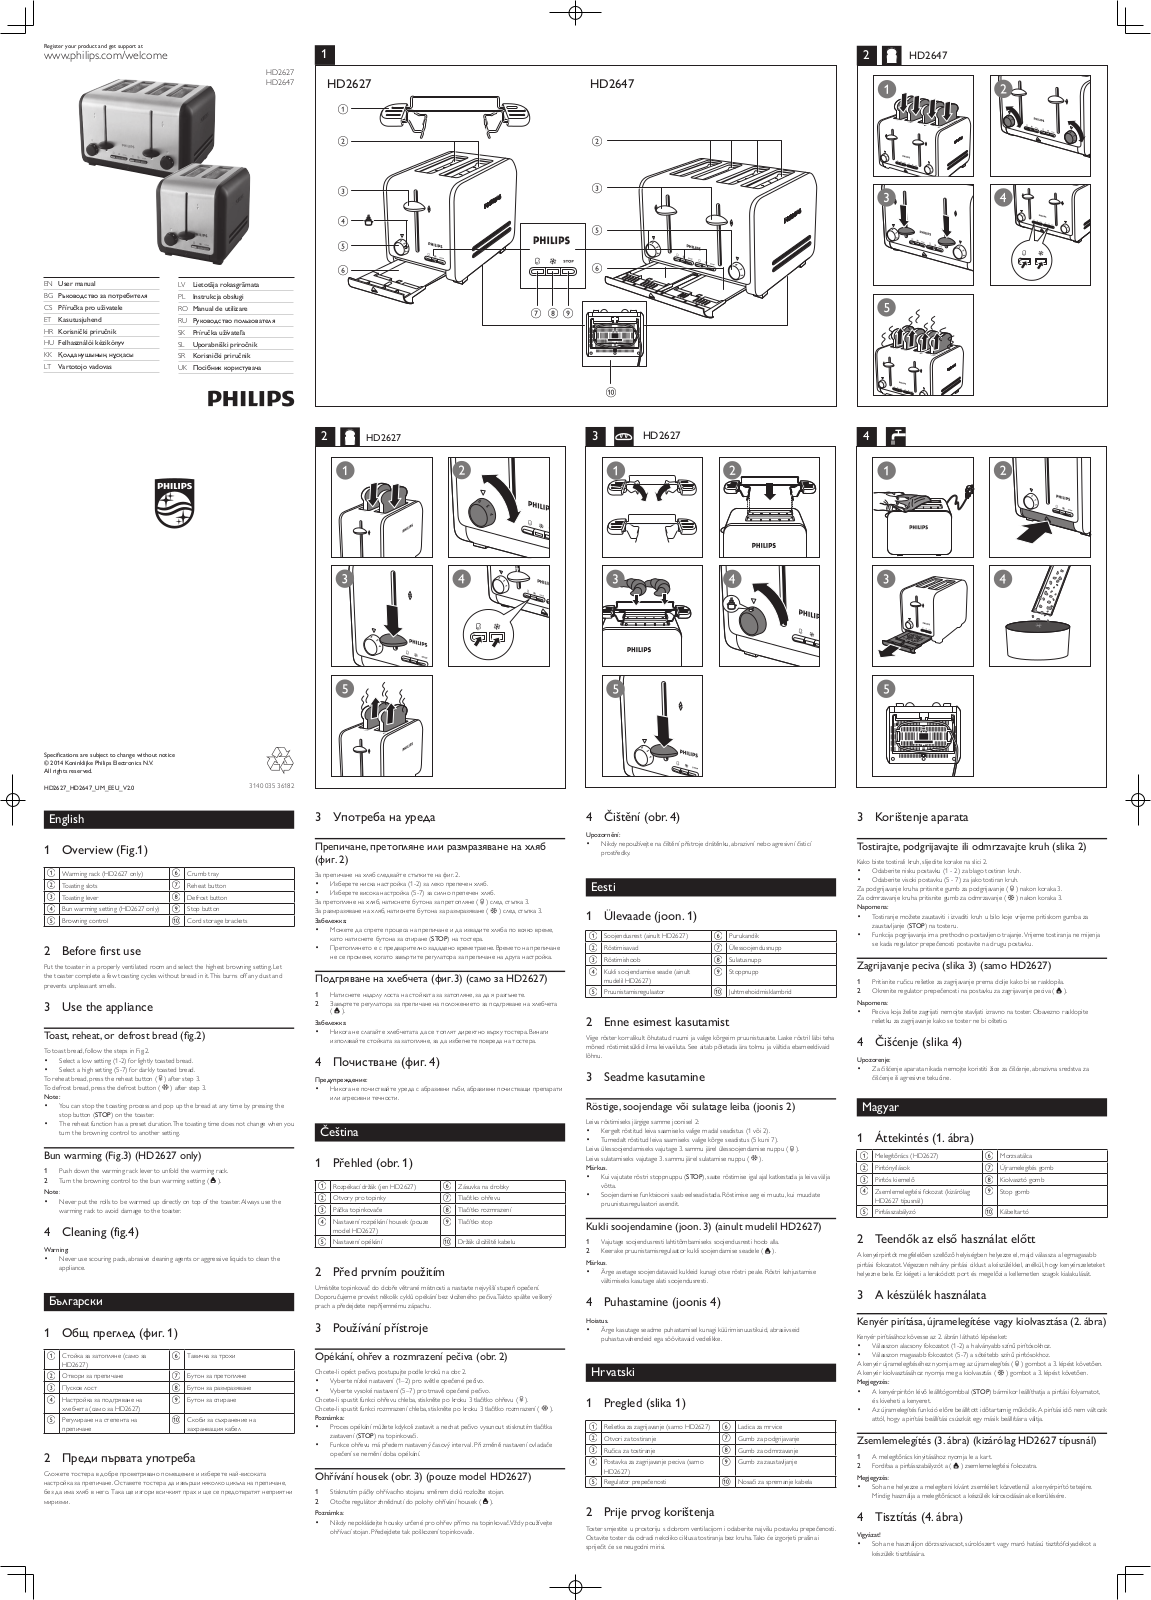 Philips HD2647 User Manual